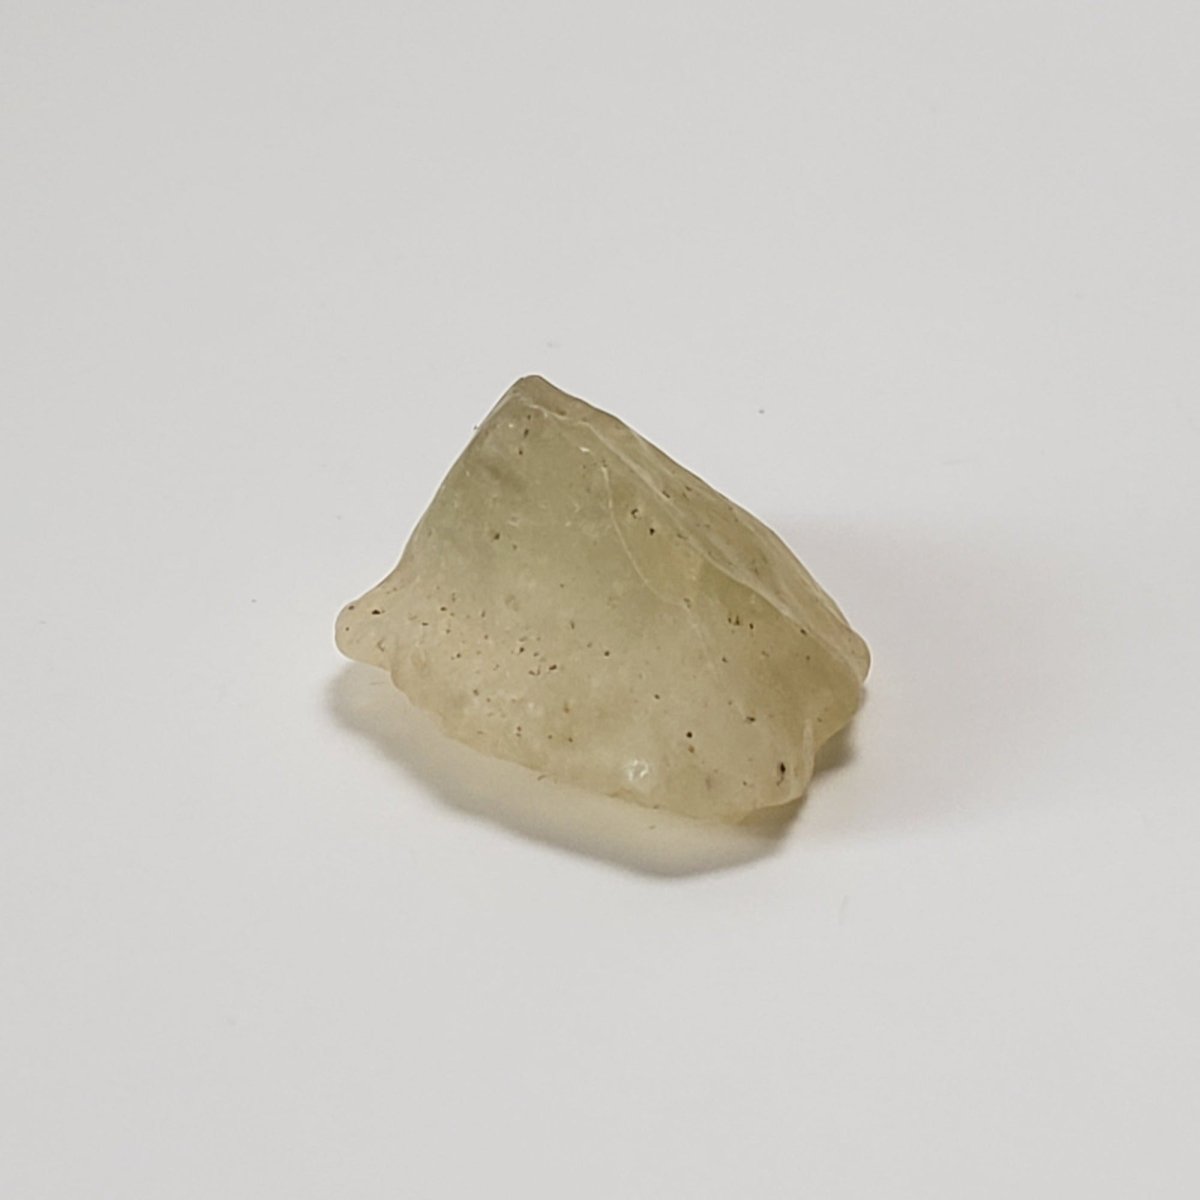 Libyan Desert Glass Tektite | 7.2 Grams | Authentic Impactite